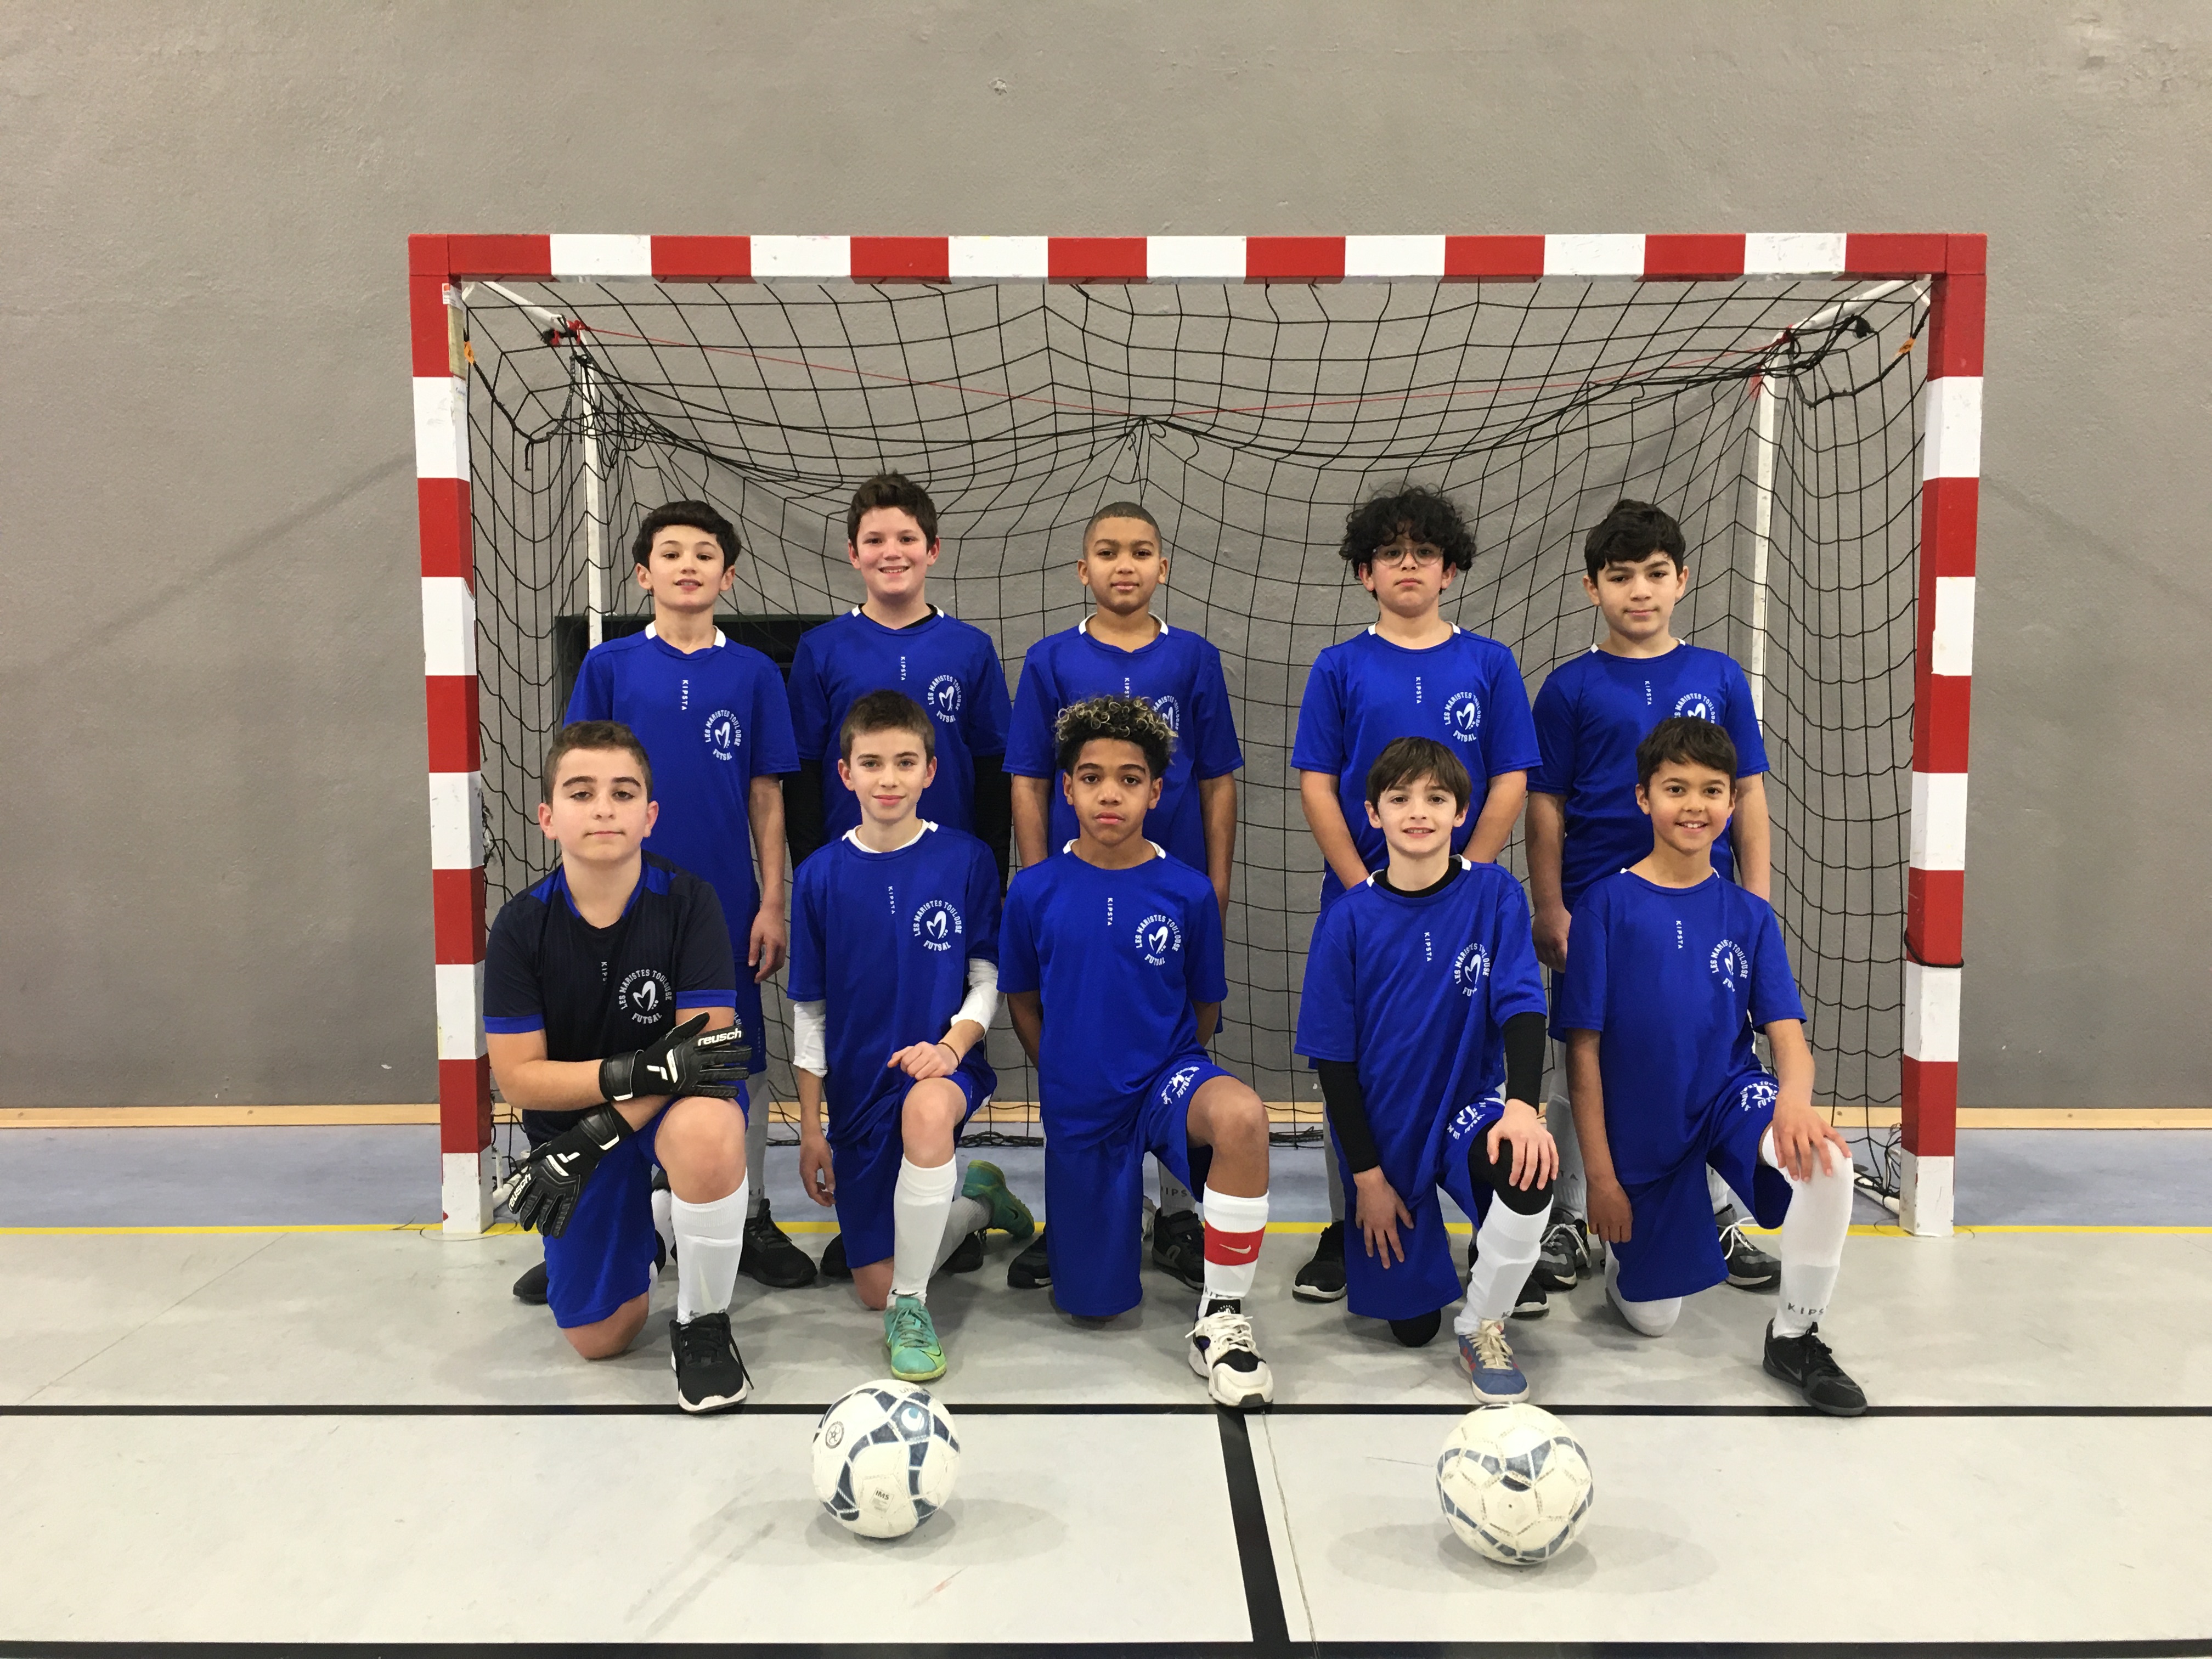 Visuel : Futsal - Les benjamins 1er du classement